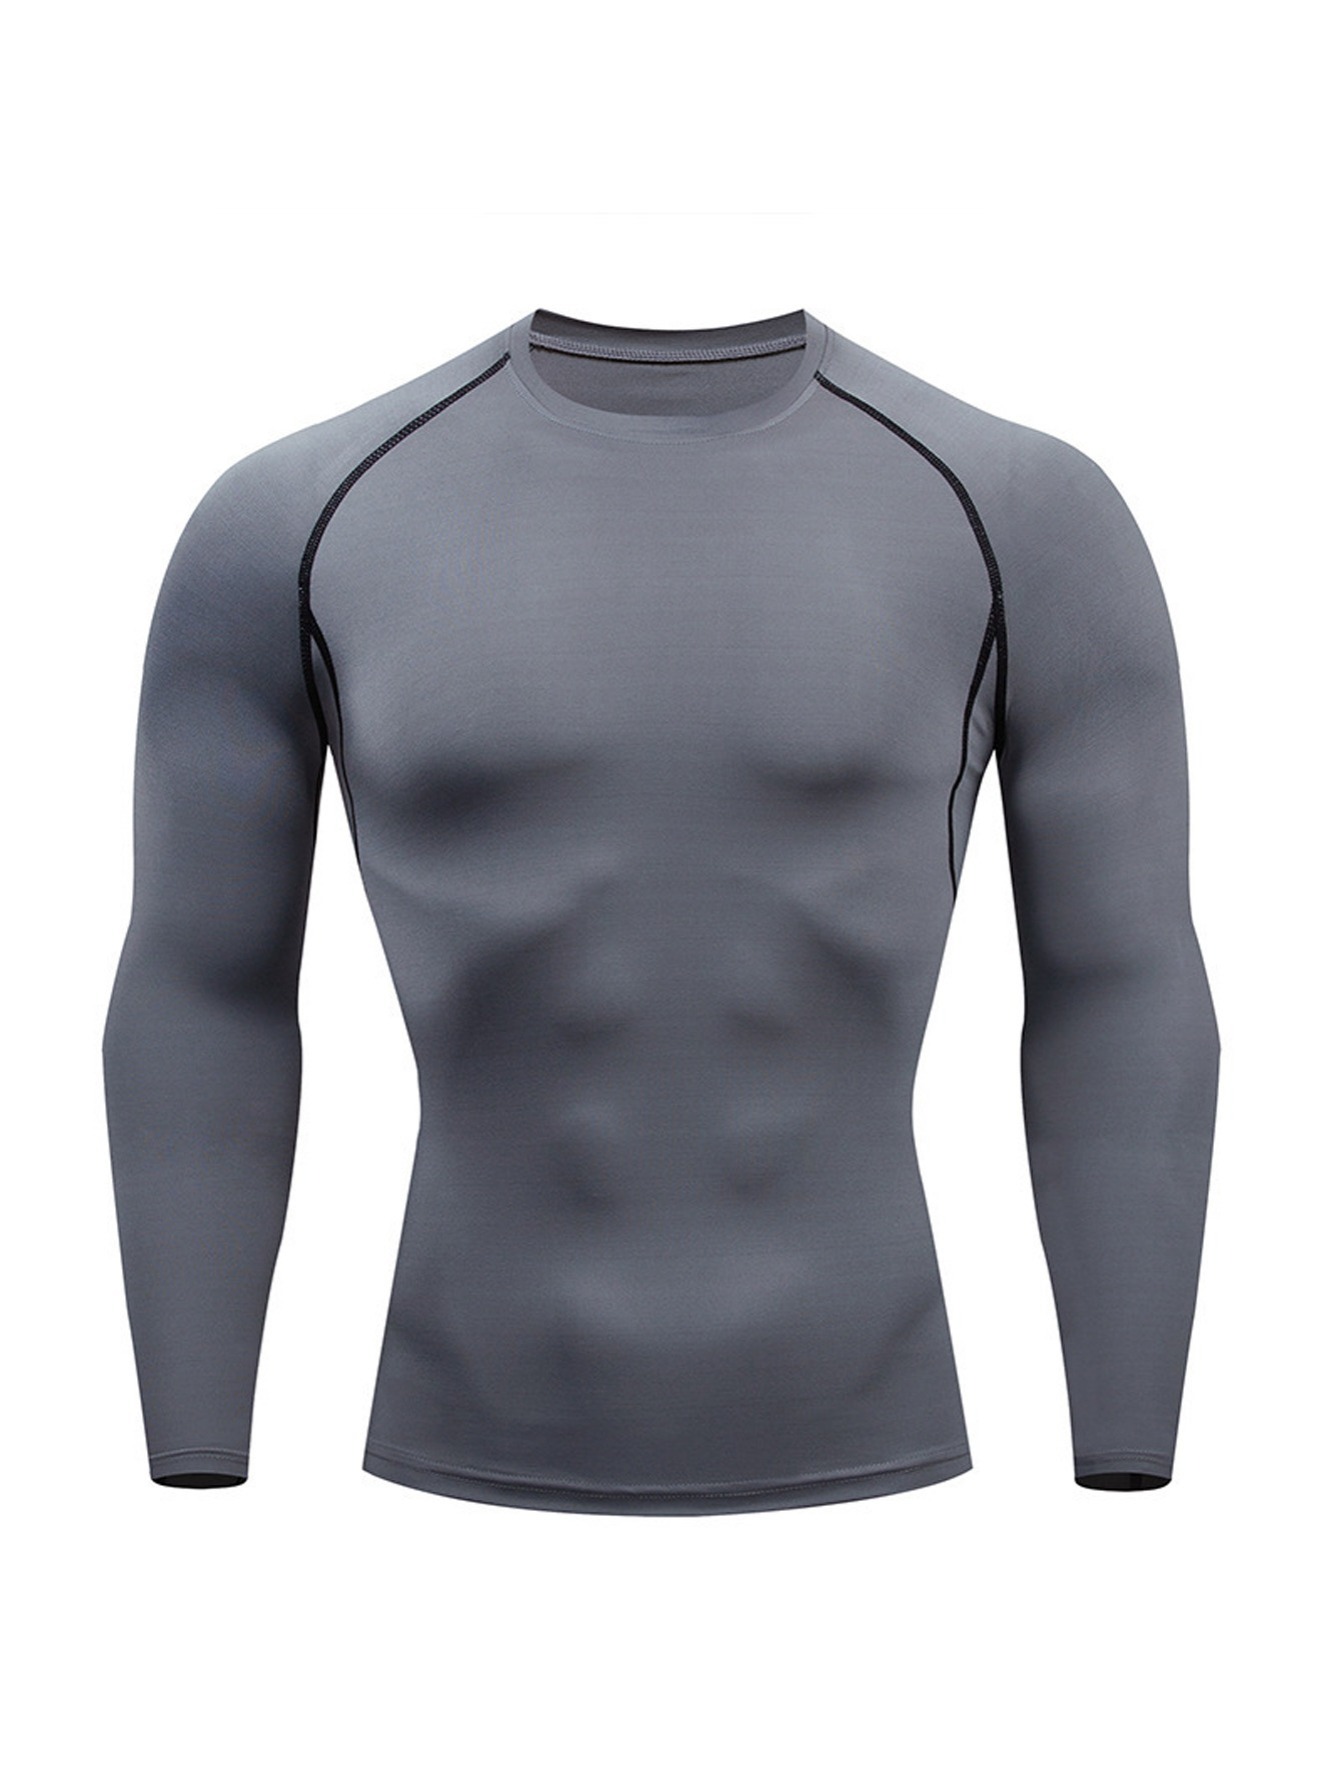 Slowmoose Men Compression Running T-shirt, Fitness Tight Long Sleeve Sport Shirt Gray Asian Size-S